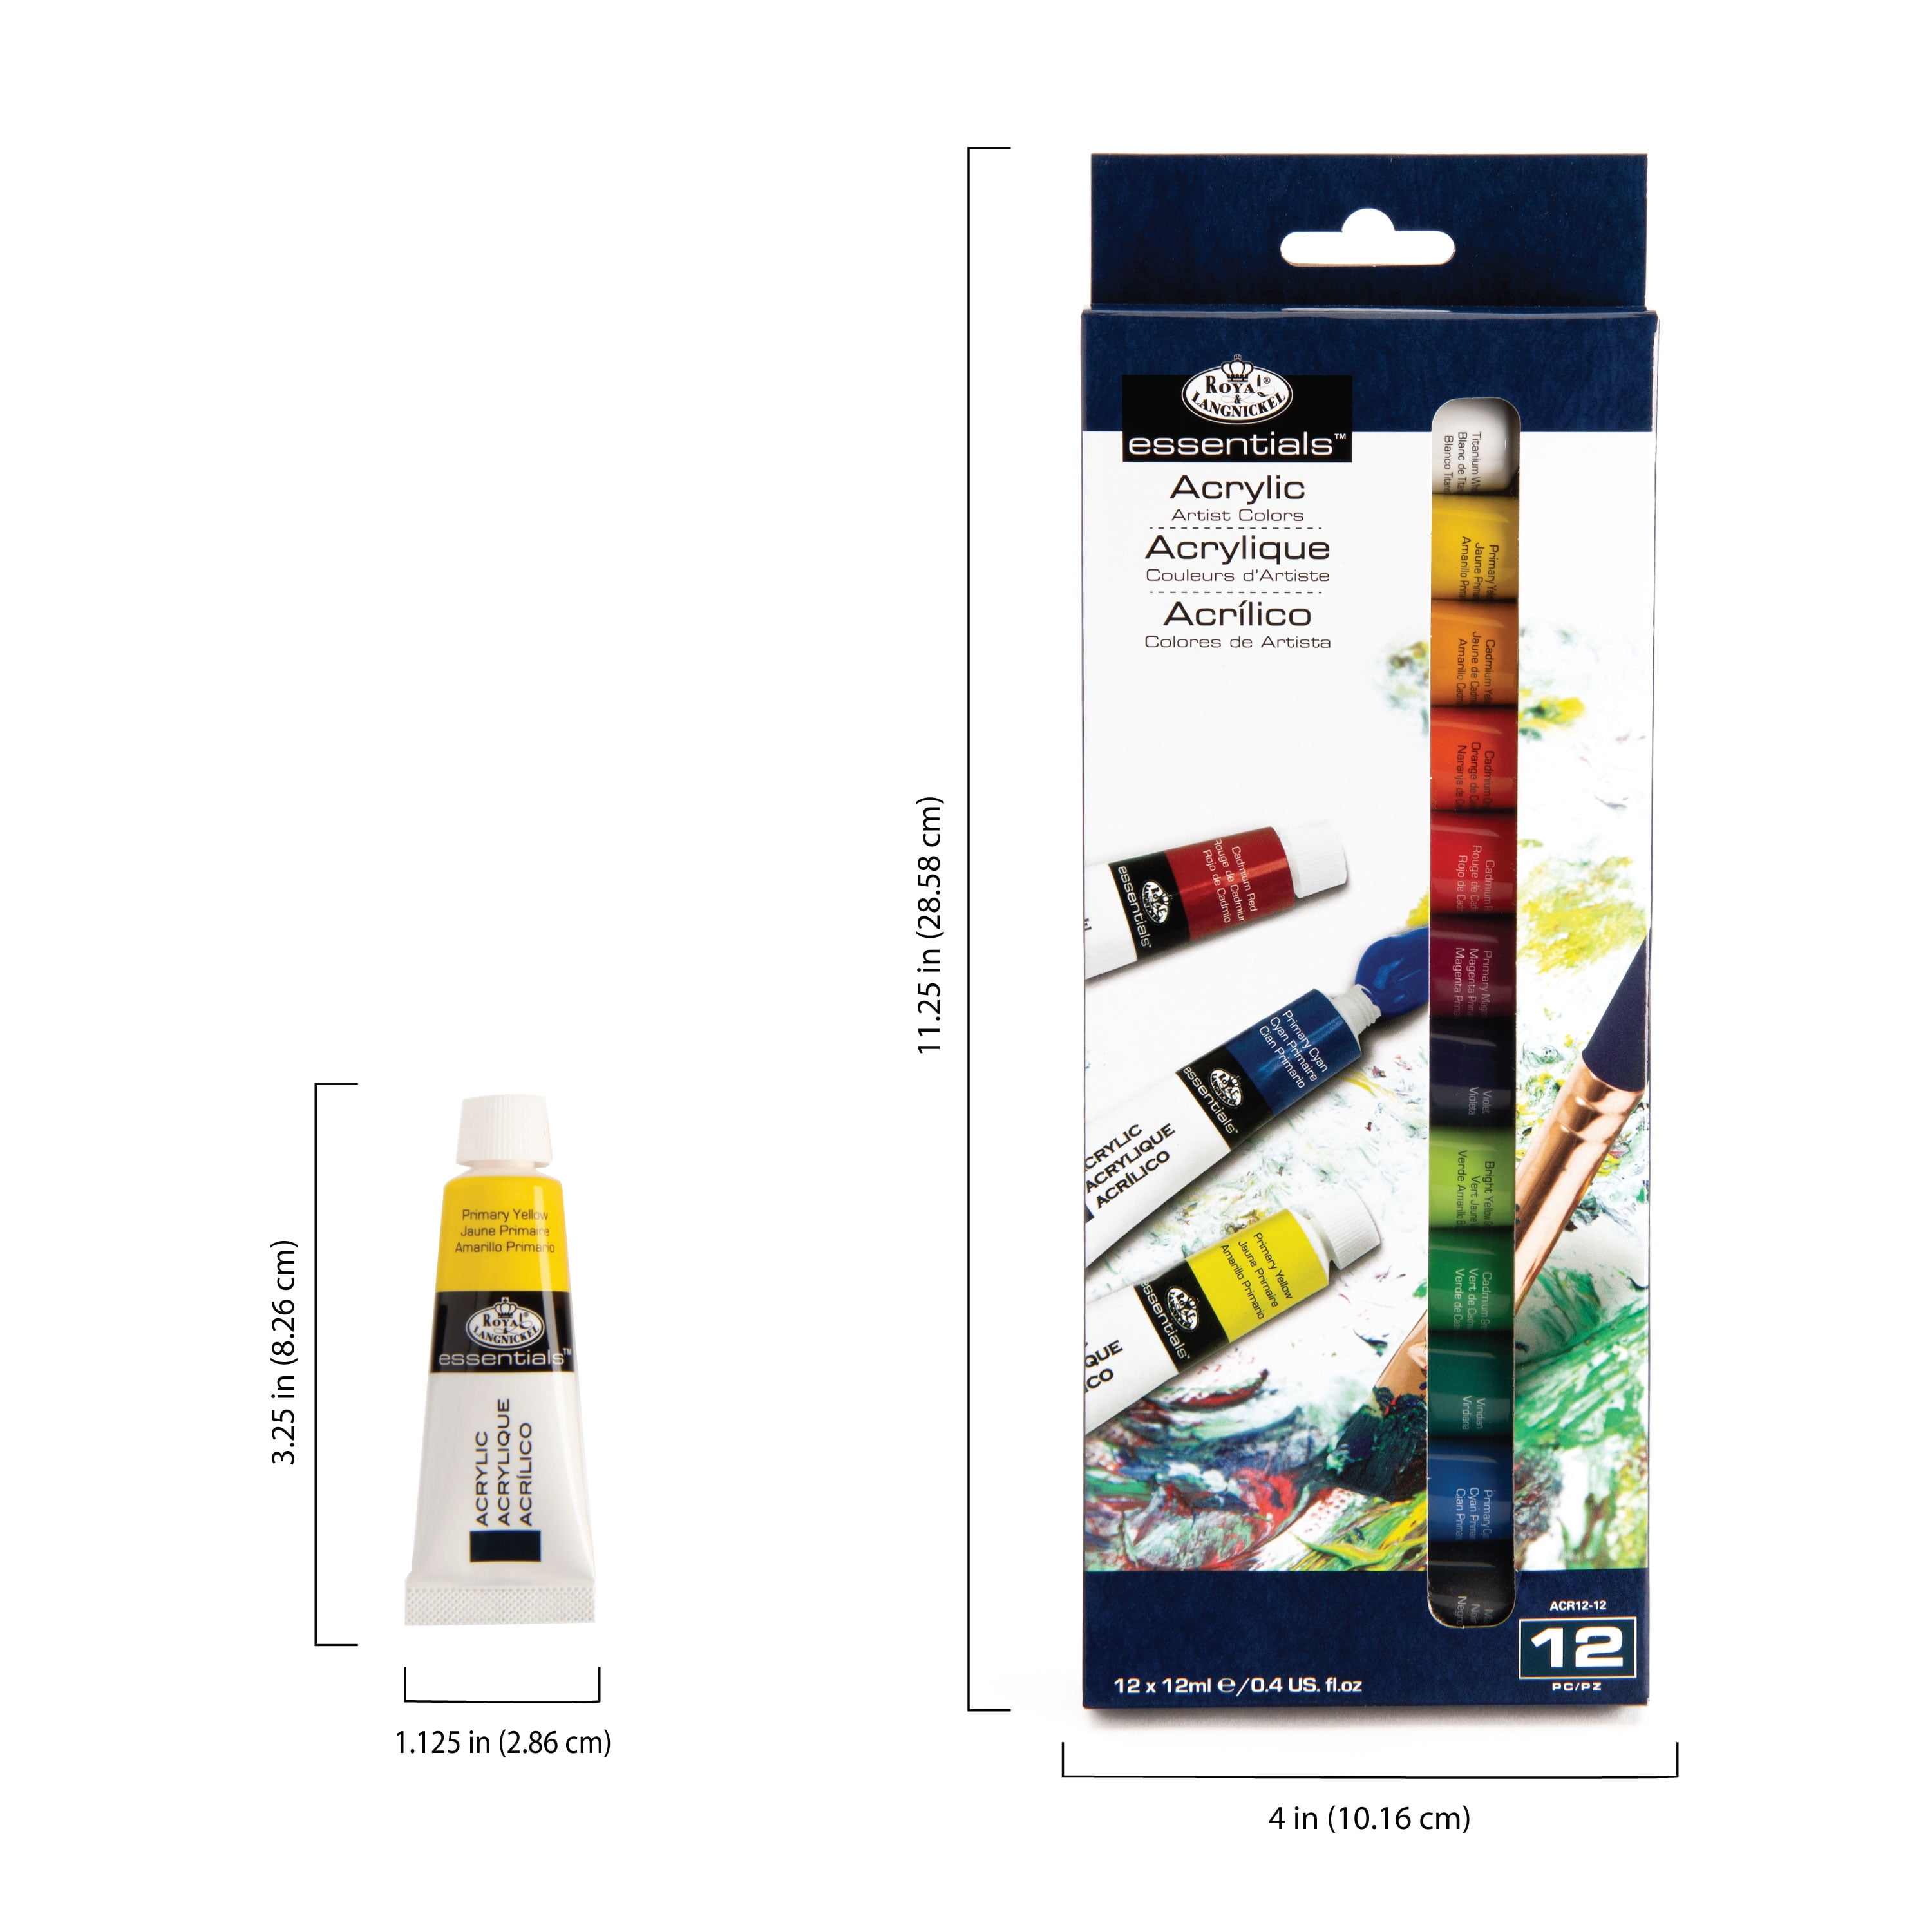 Royal & Langnickel - Essentials 12ml Acrylic Paint Set, Neon, 12 Colors